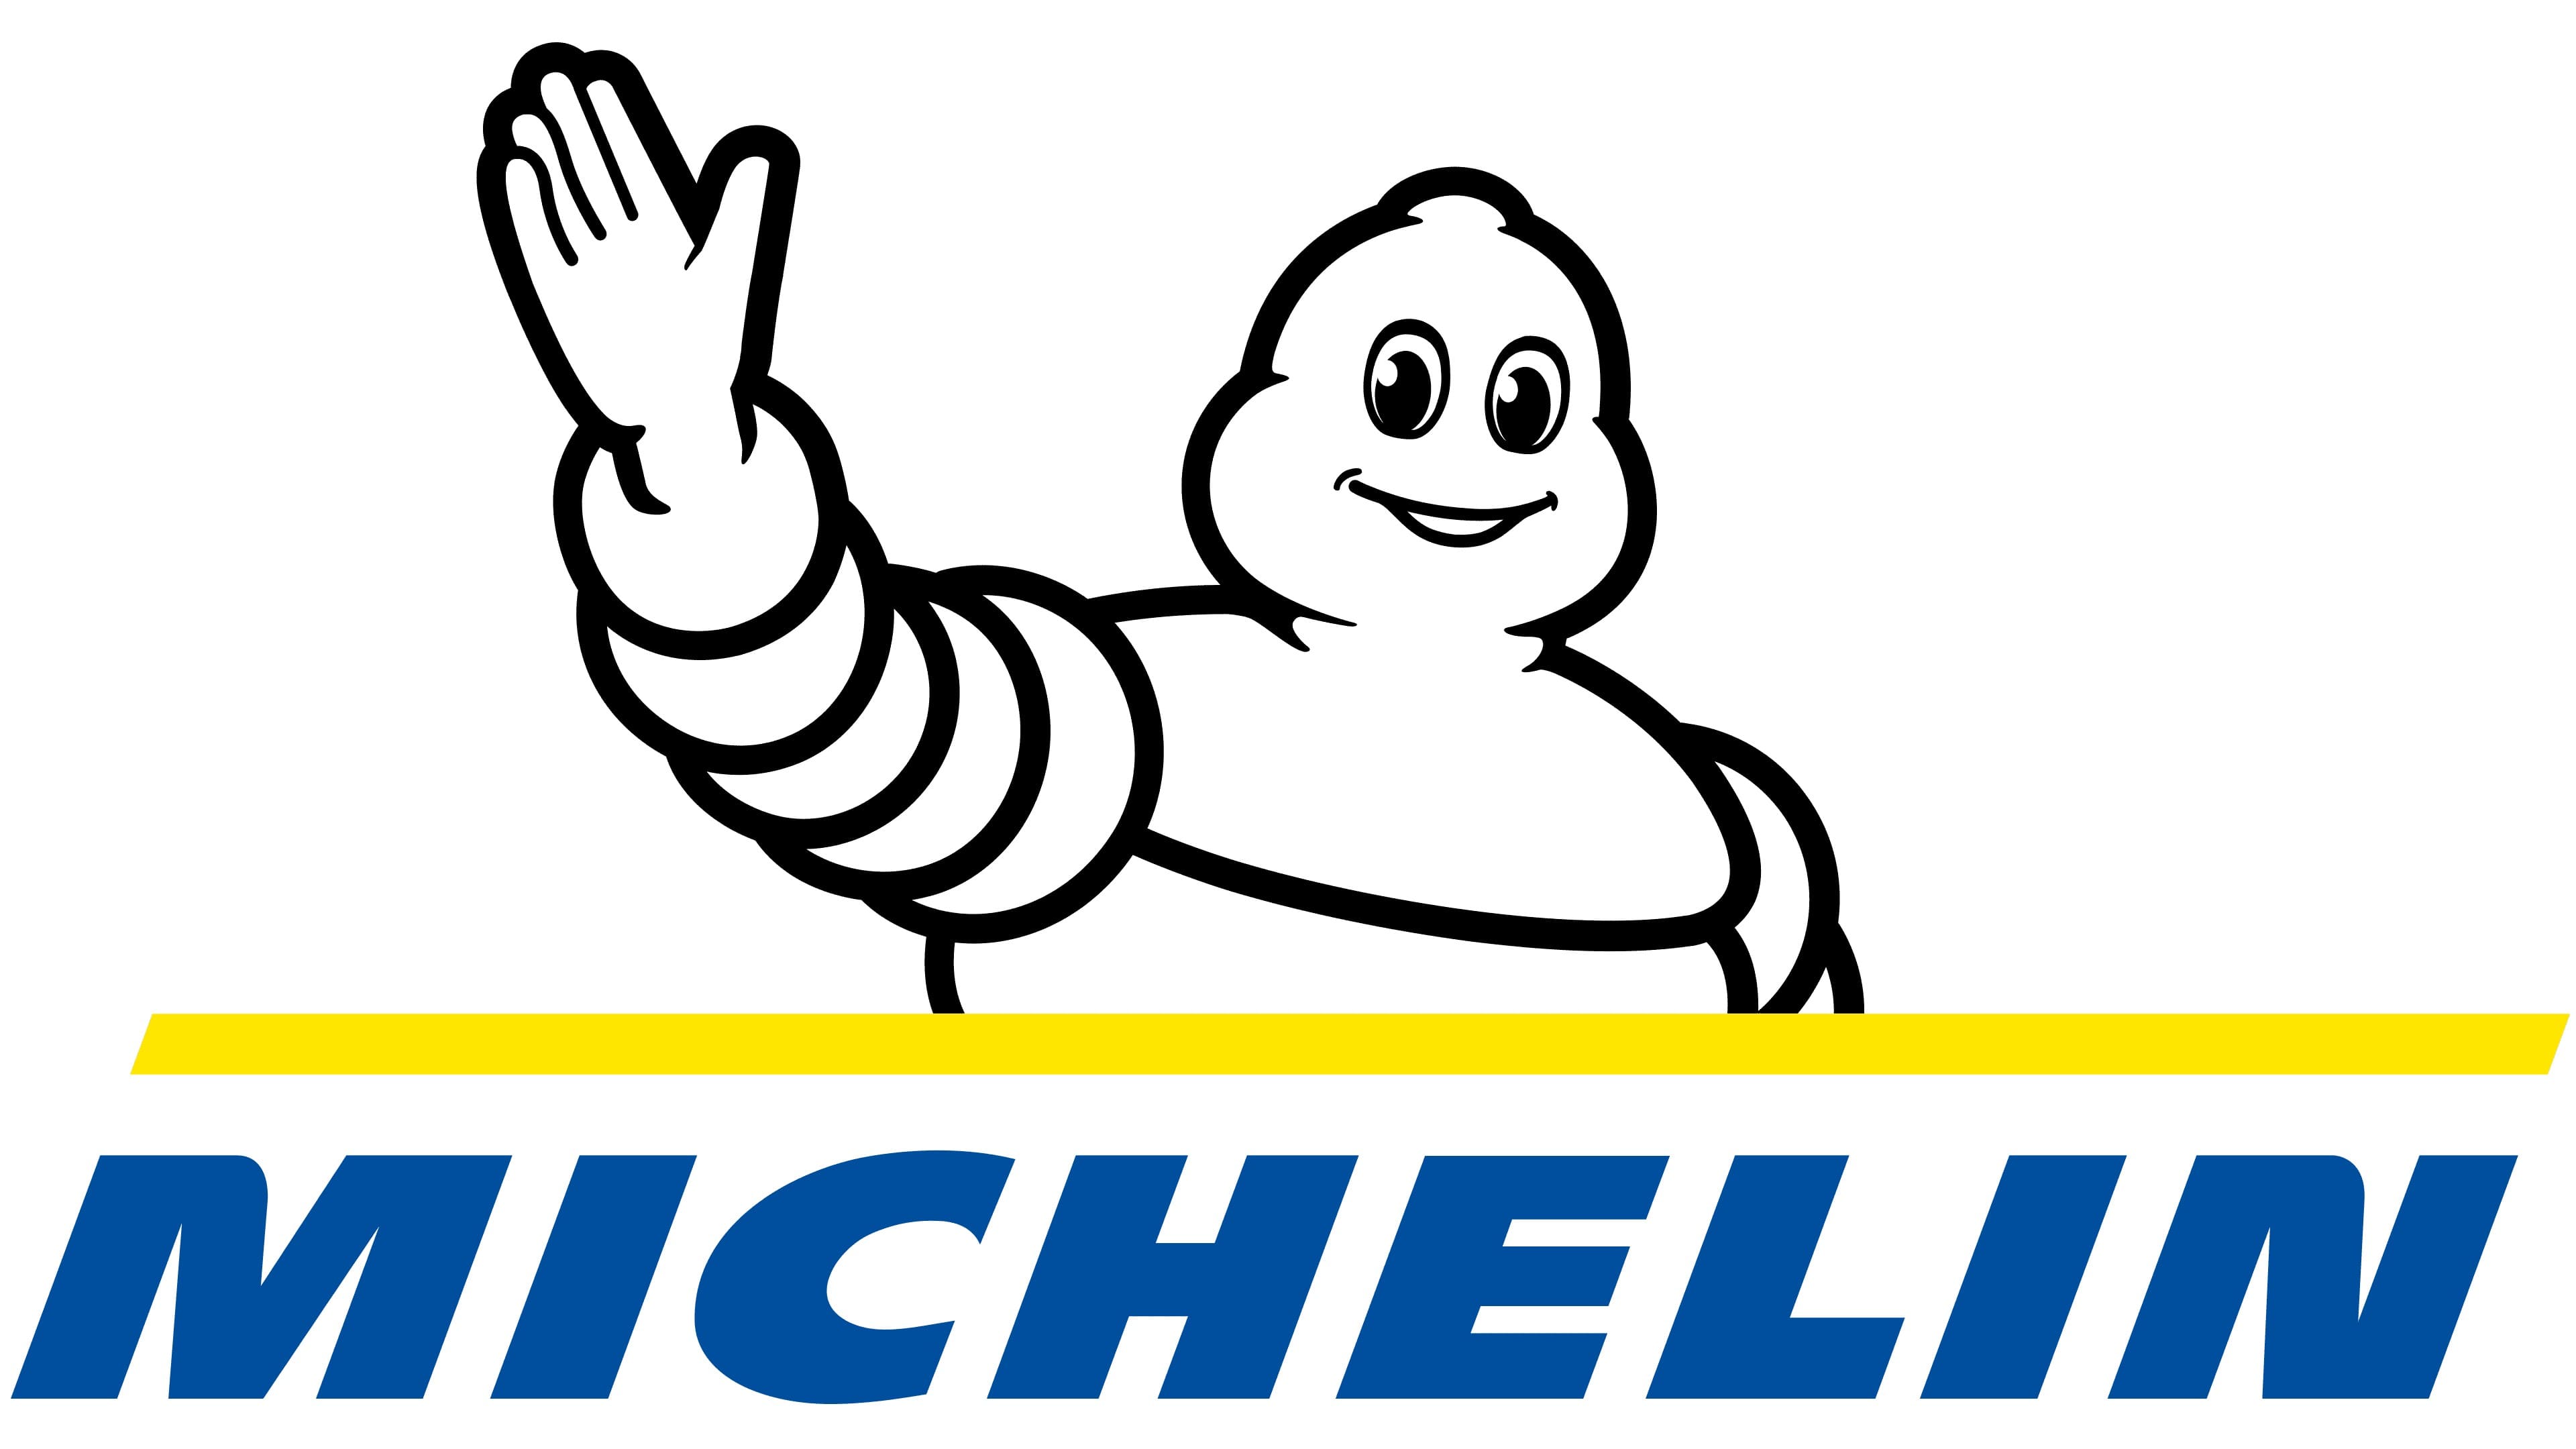 Brand logo for Michelin tires